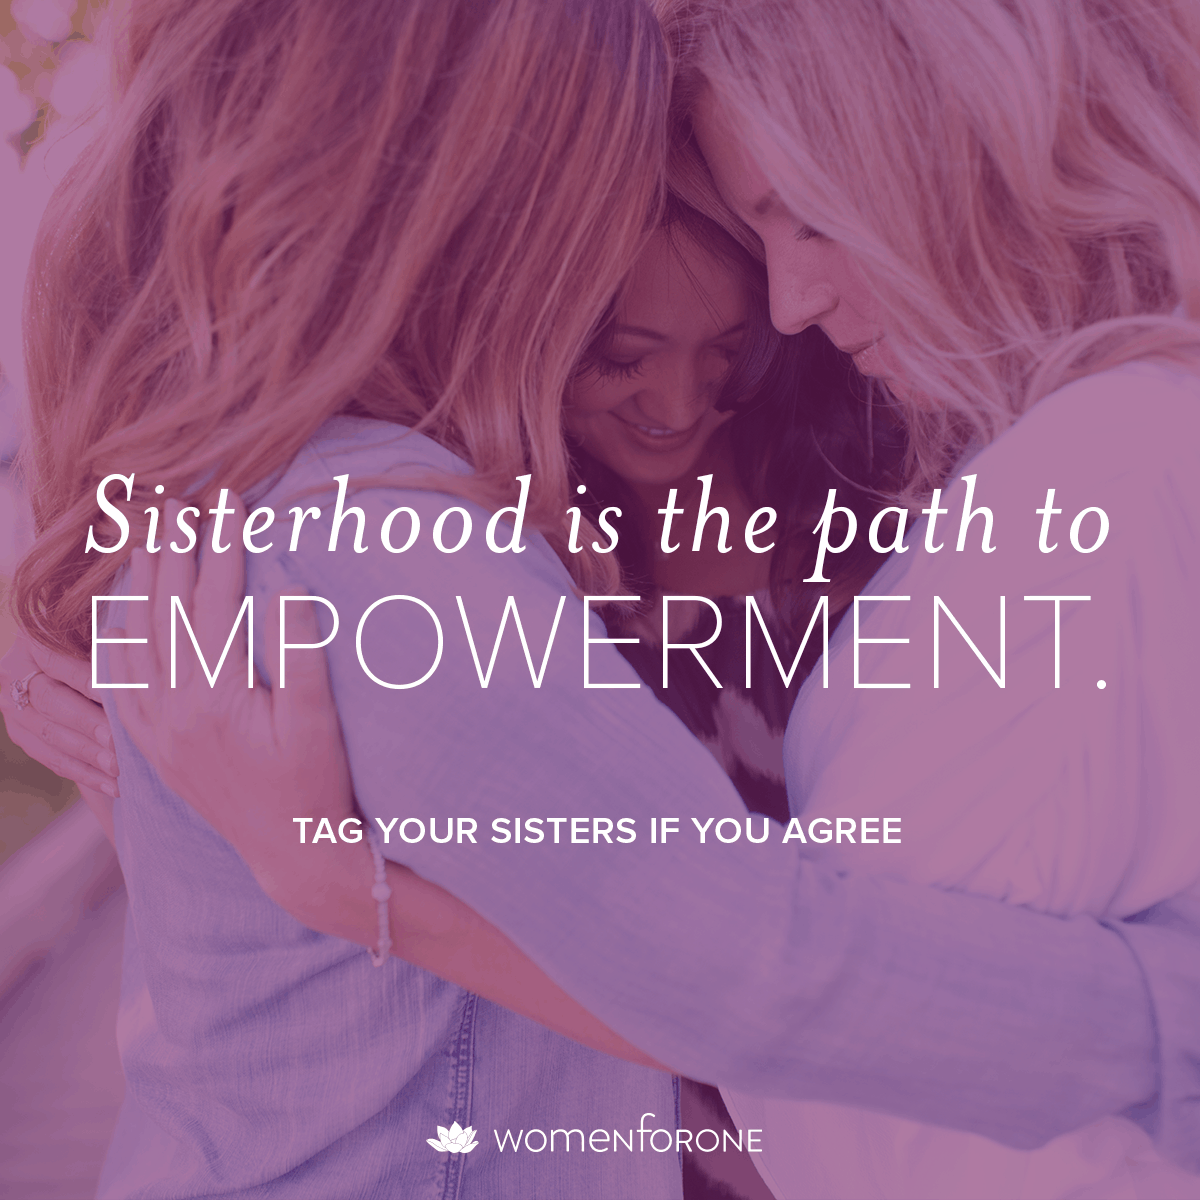 Sisterhood is the path to empowerment.